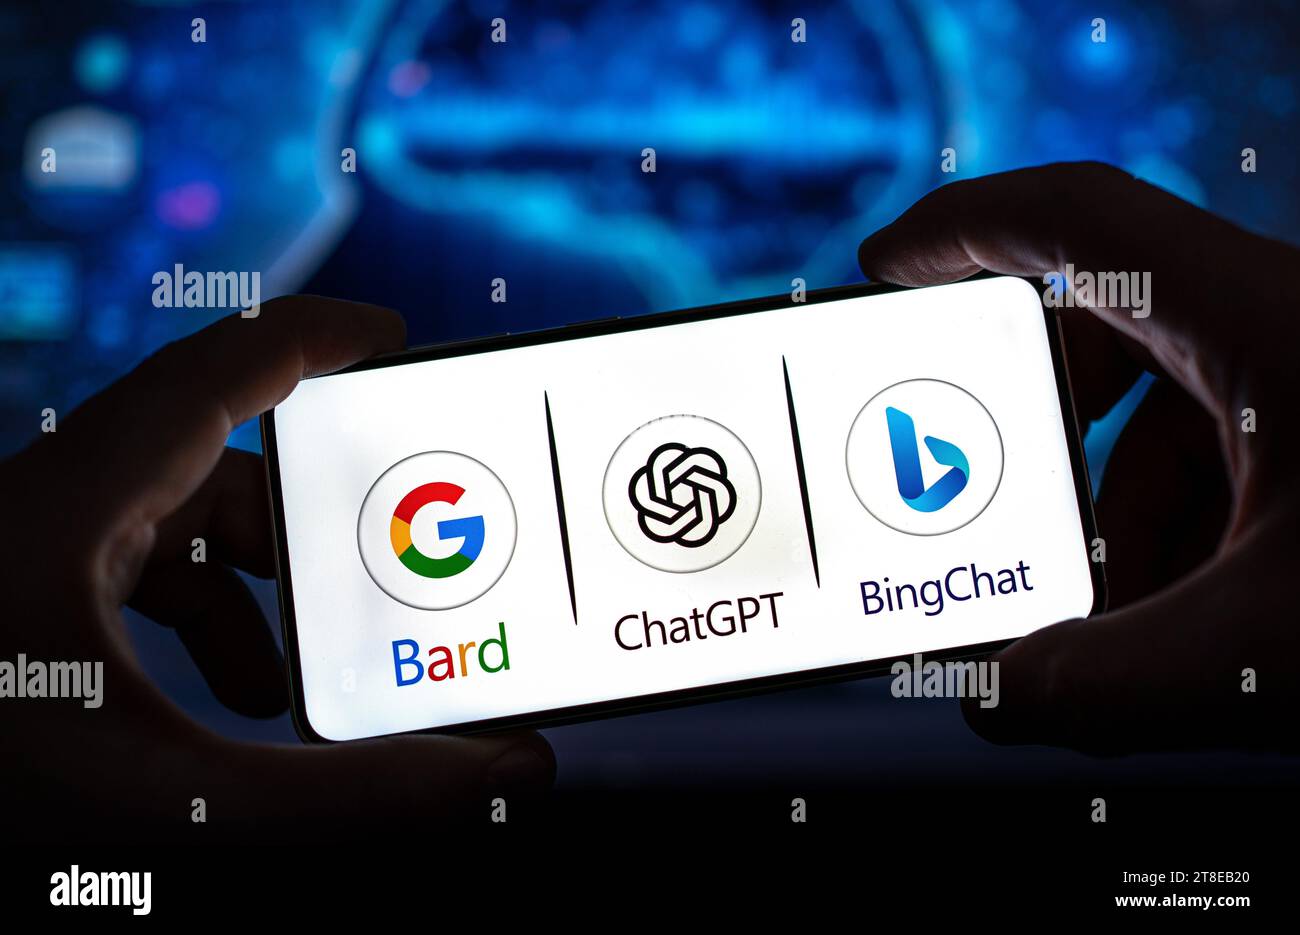 Google Bard VS ChatGPT VS Bing Chat displayed on Mobile Device Stock Photo